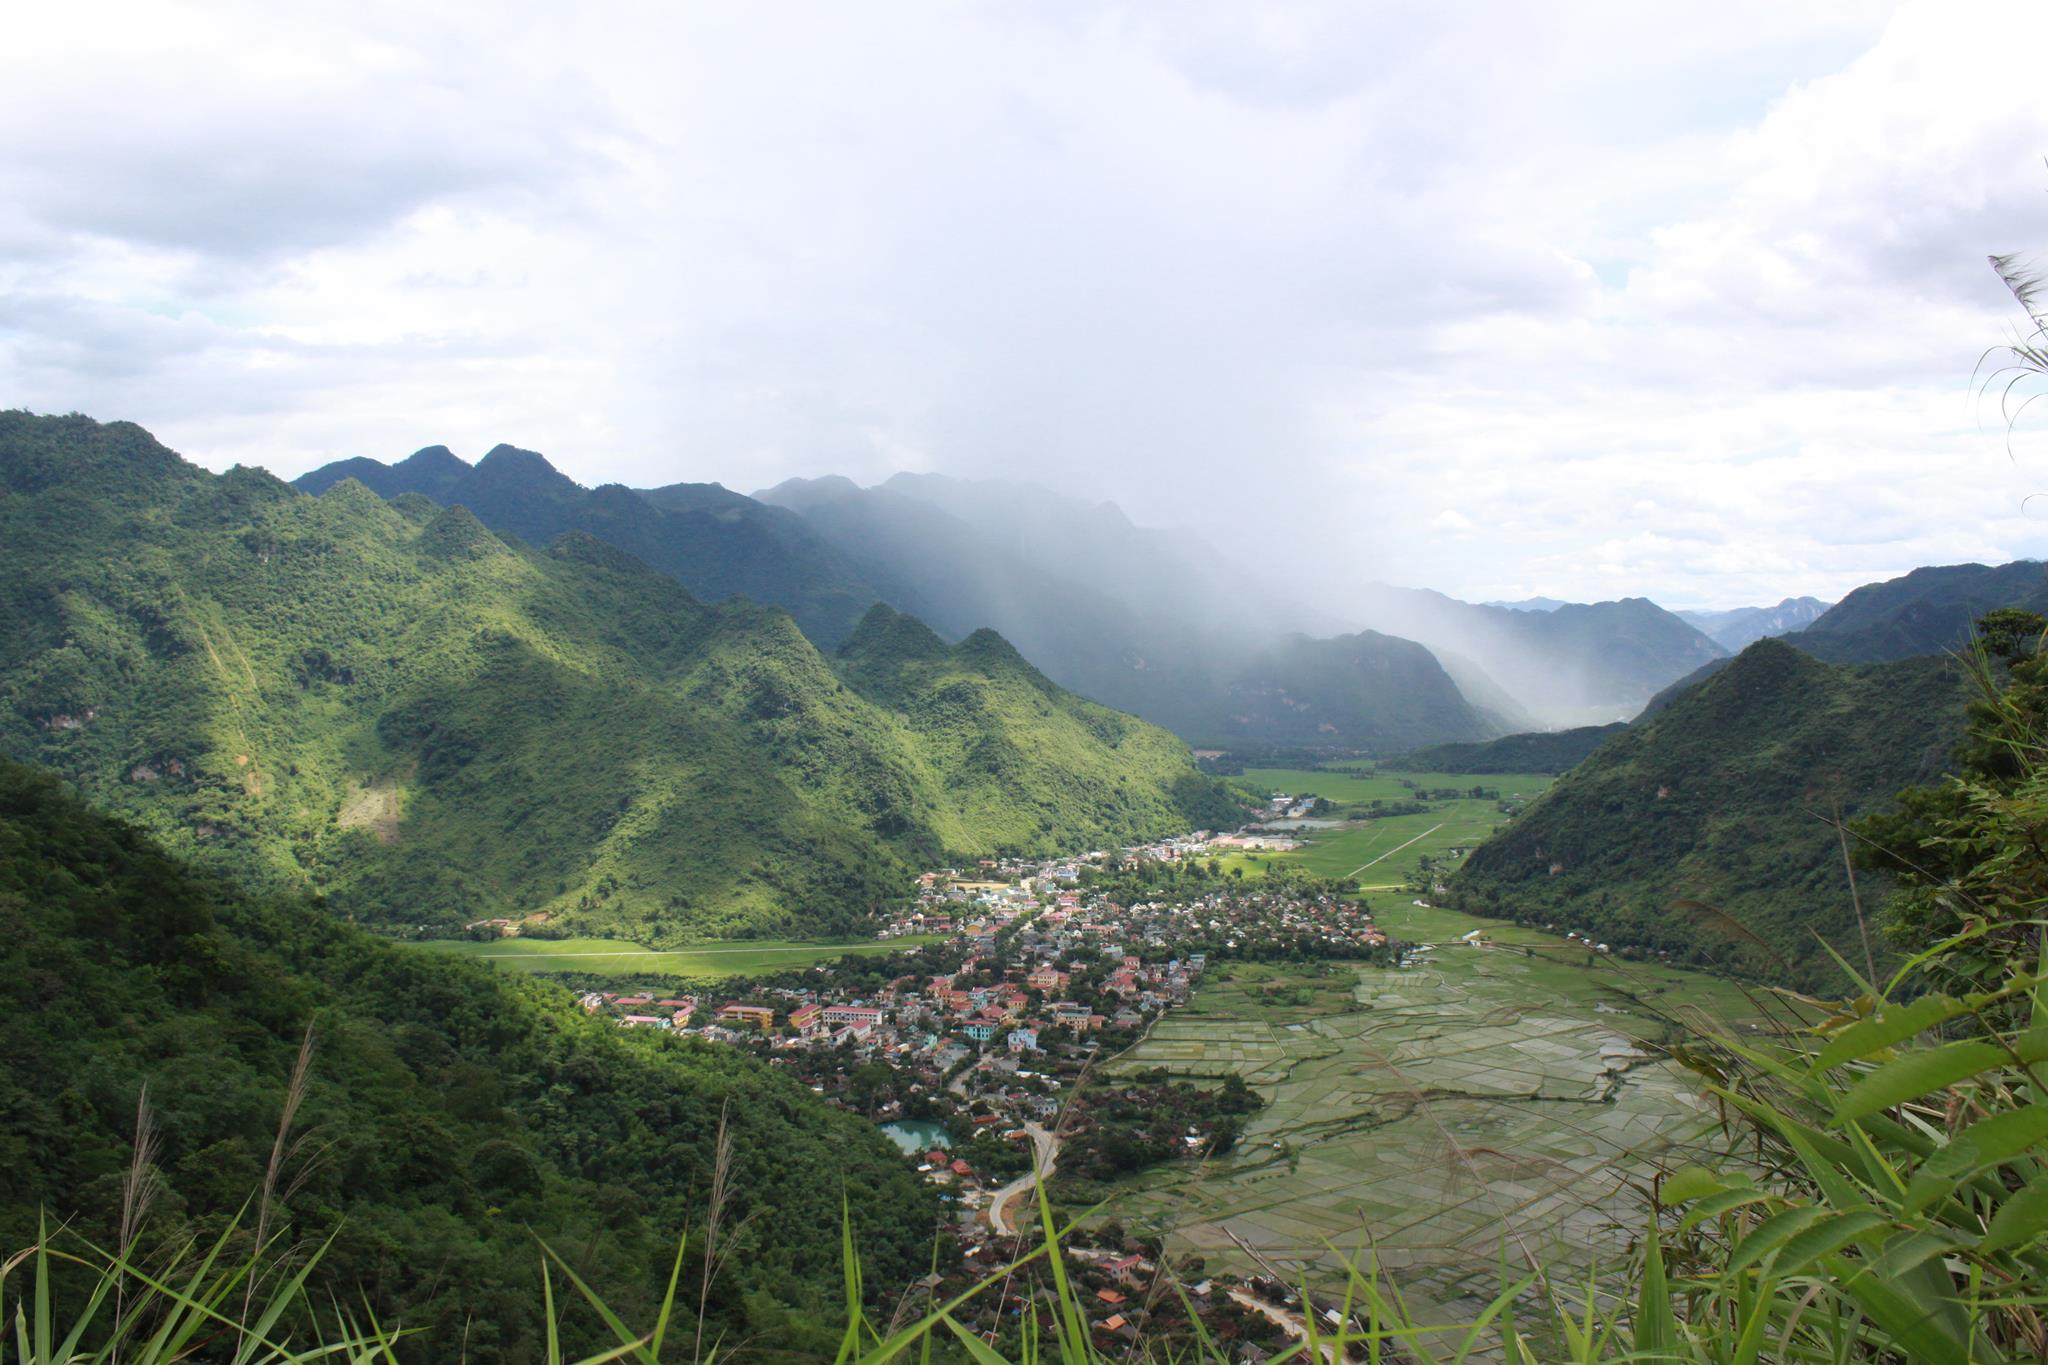 The northern highlands of Vietnam